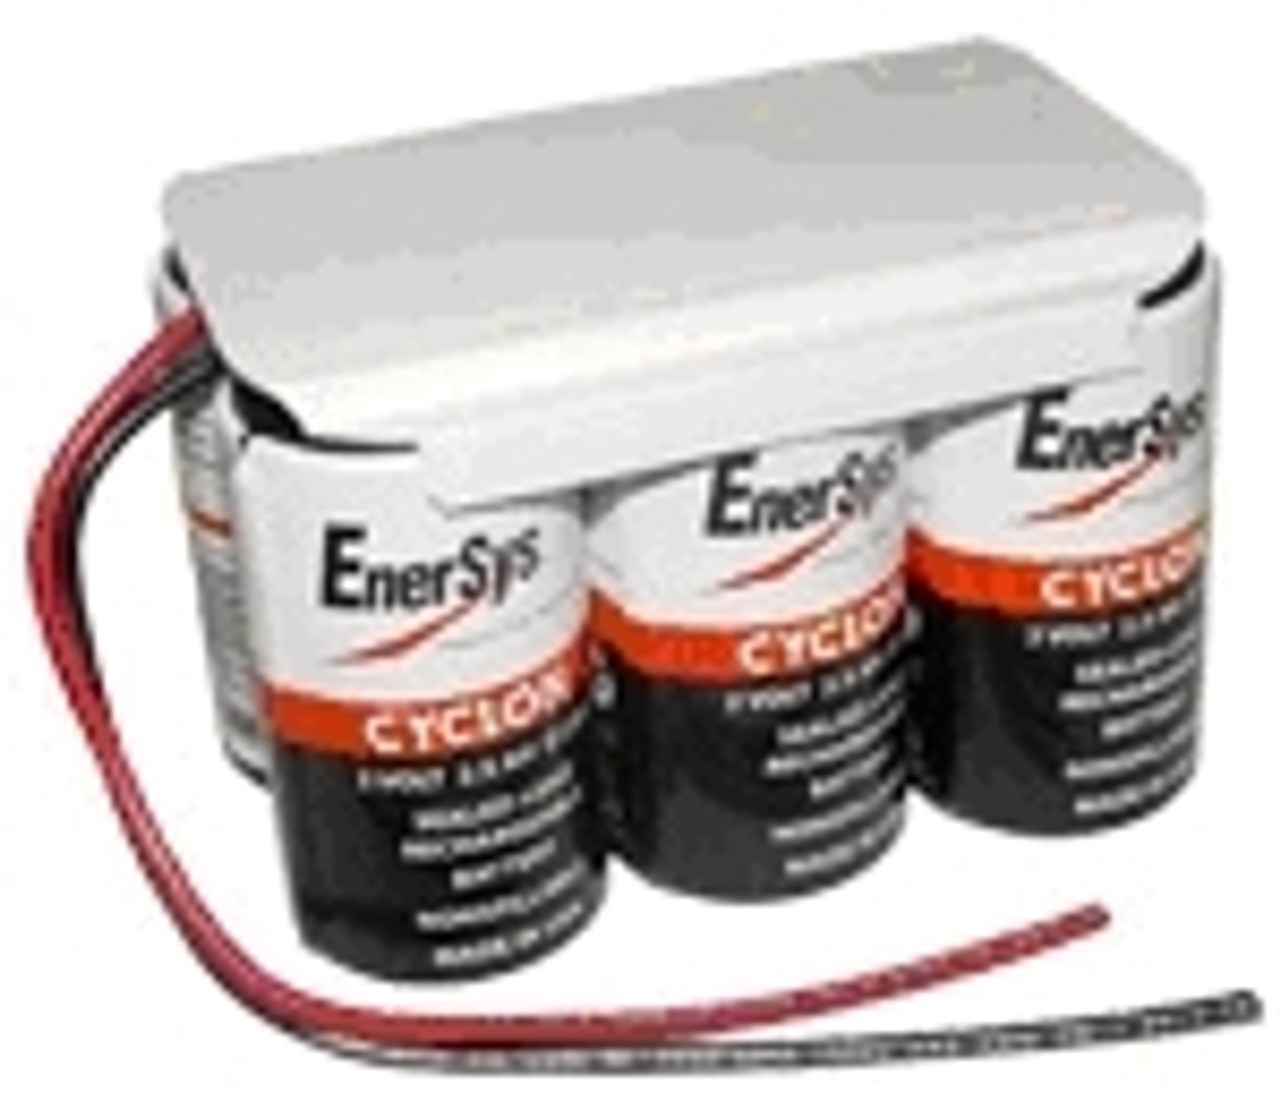 Enersys 0860-0115 12V 4.5Ah Battery